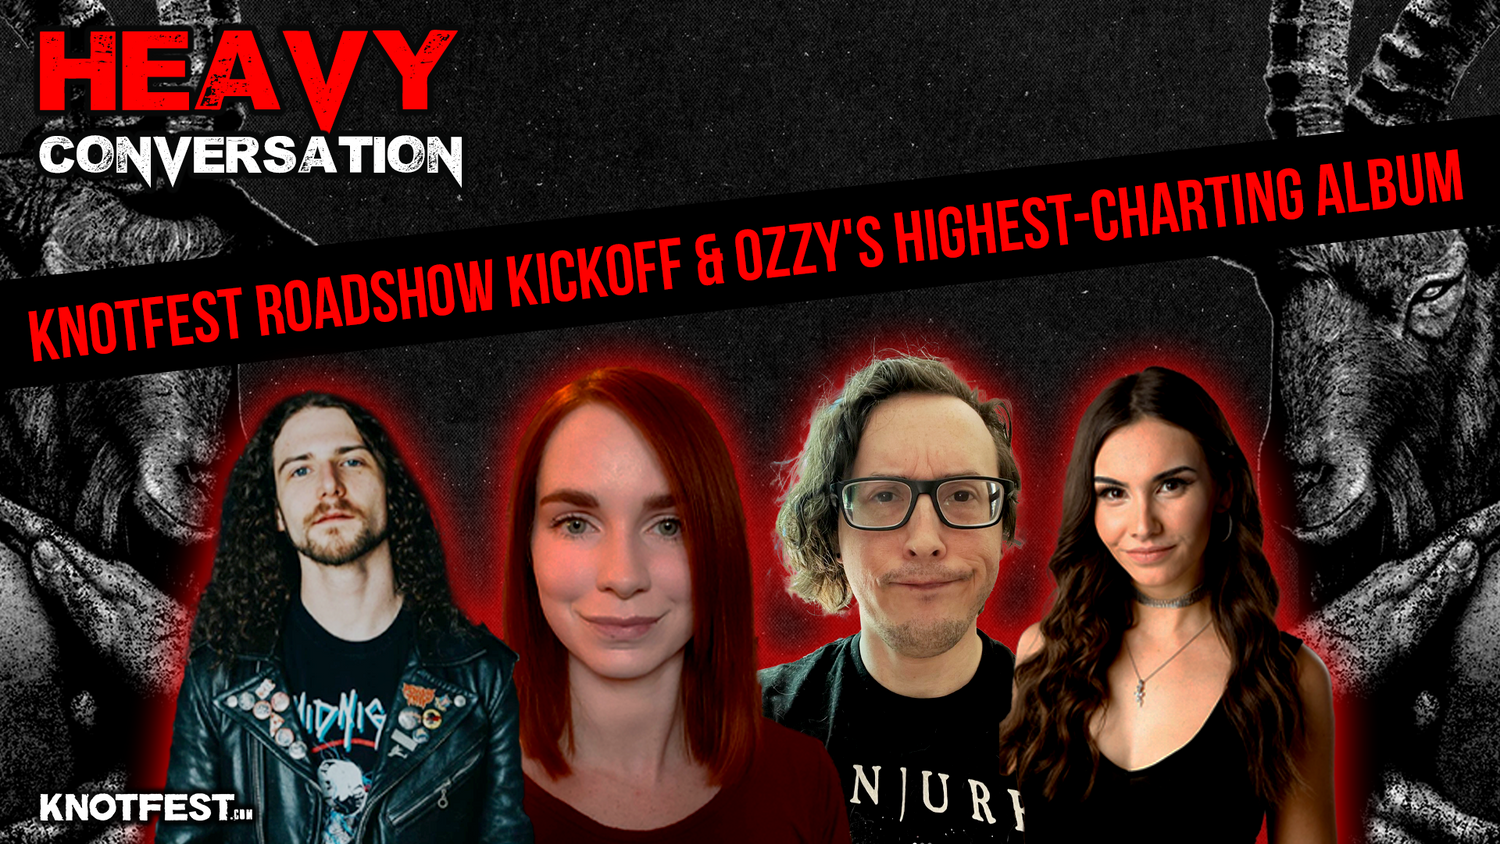 HEAVY CONVERSATION: Knotfest Roadshow kickoff & Ozzy's highest charting album